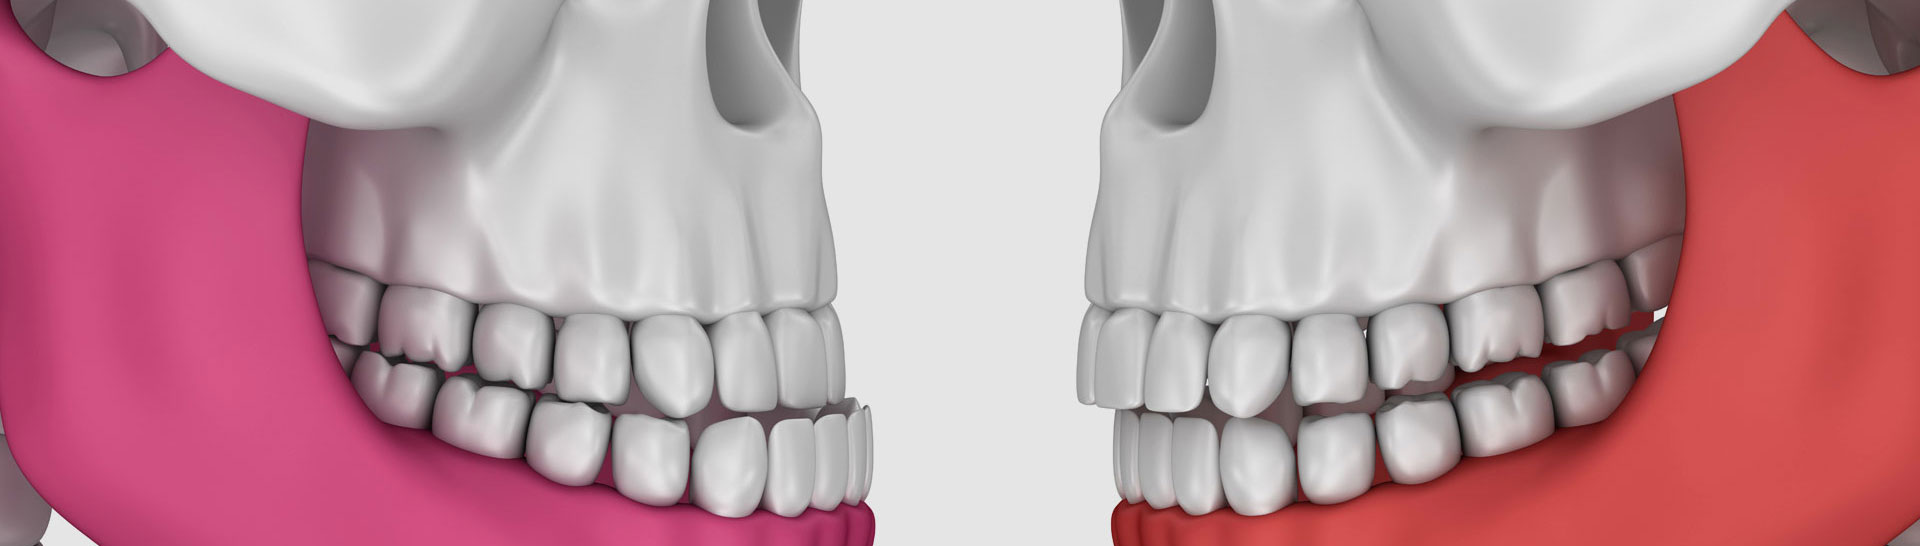 https://drfotinos.com/wp-content/uploads/2020/03/11-2019_Neuromuscular_Dentistry_TMJ_Treatments_banner-1.jpg